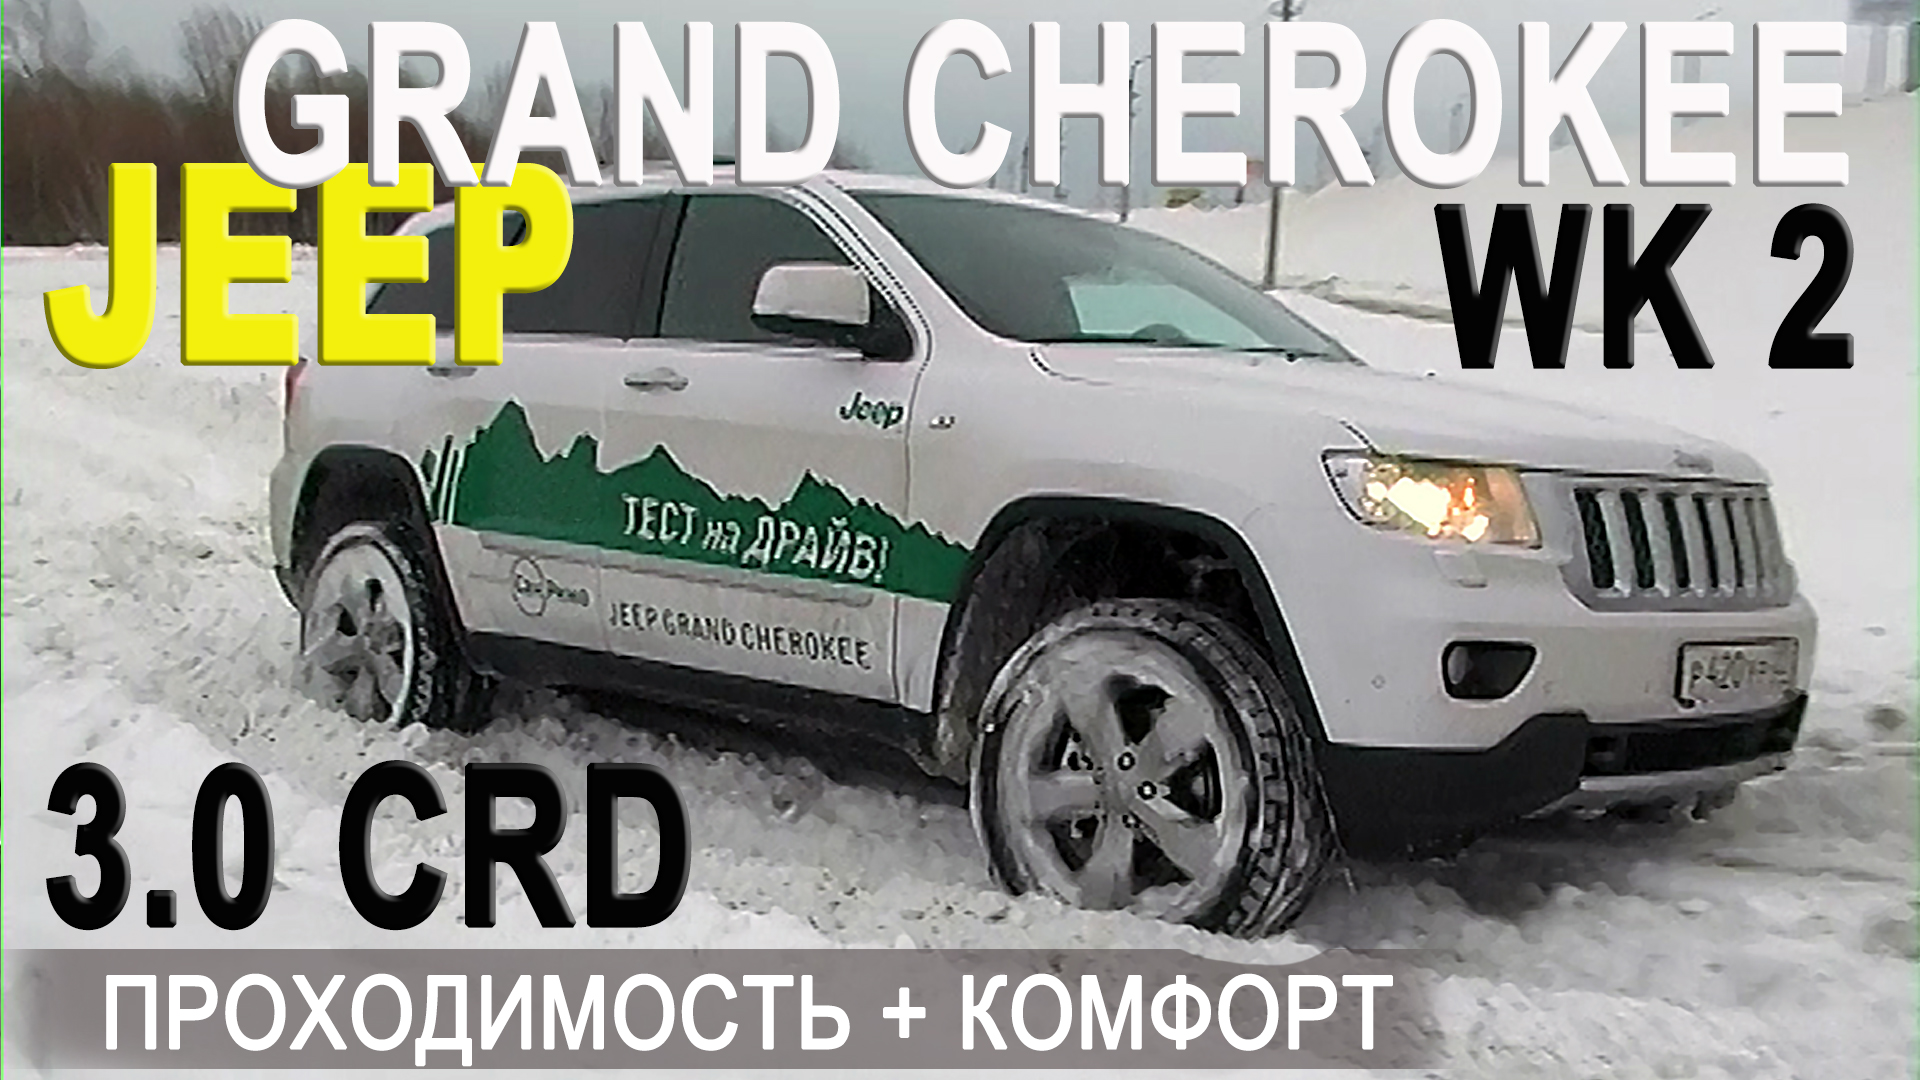 "Проходимость + комфорт" тест JEEP Grand Cherokee 3.0 CRD/ AVTOSALON TV